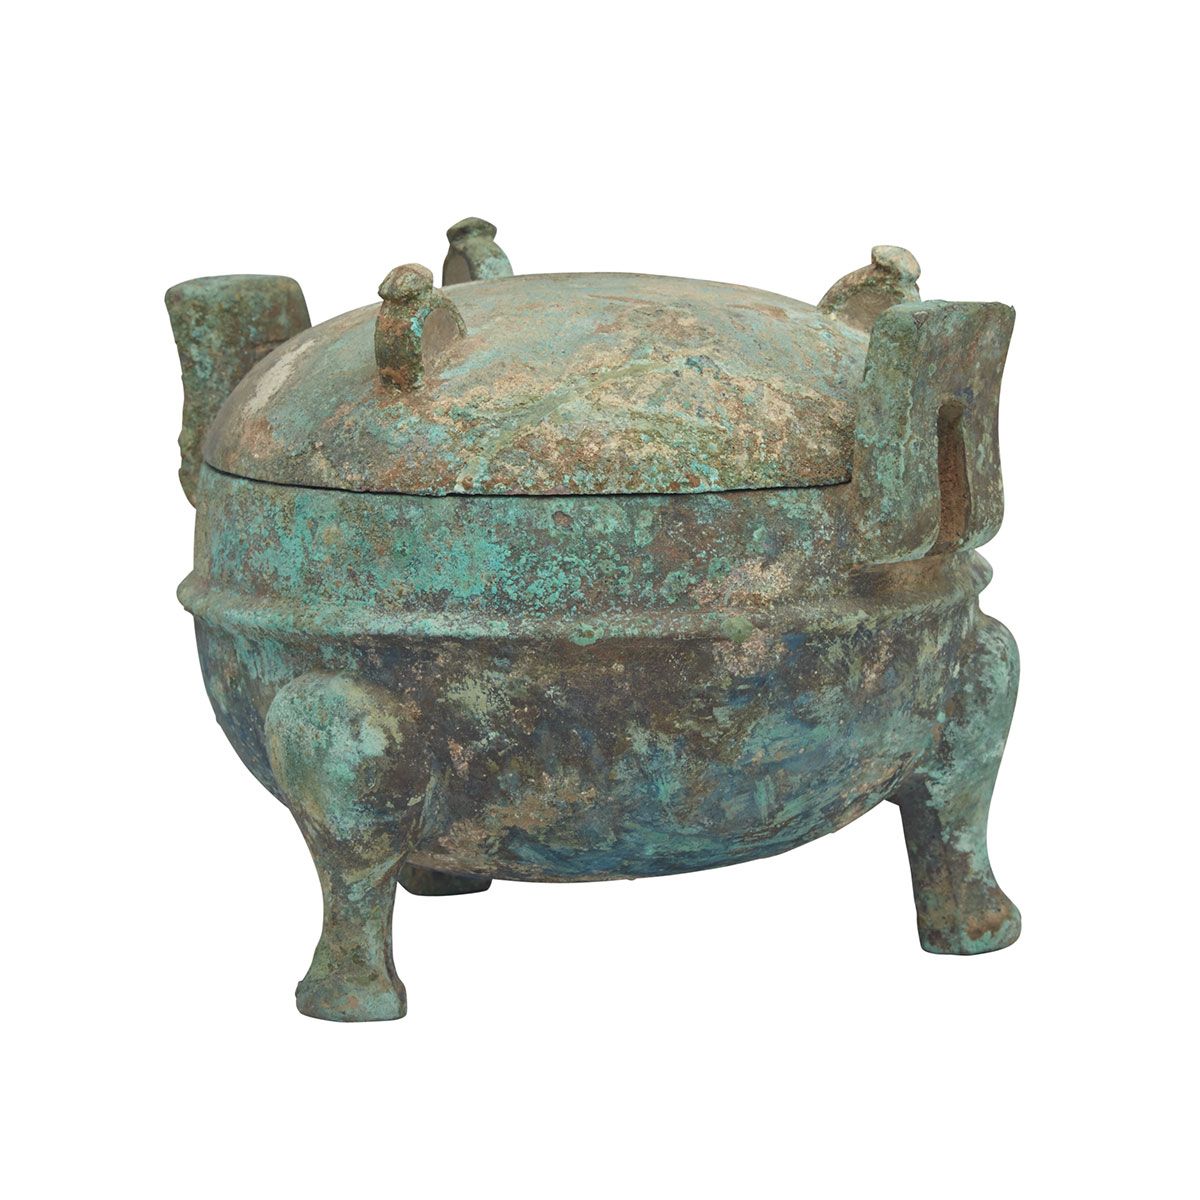 Bronze Tripod Vessel, Ding, Han Dynasty